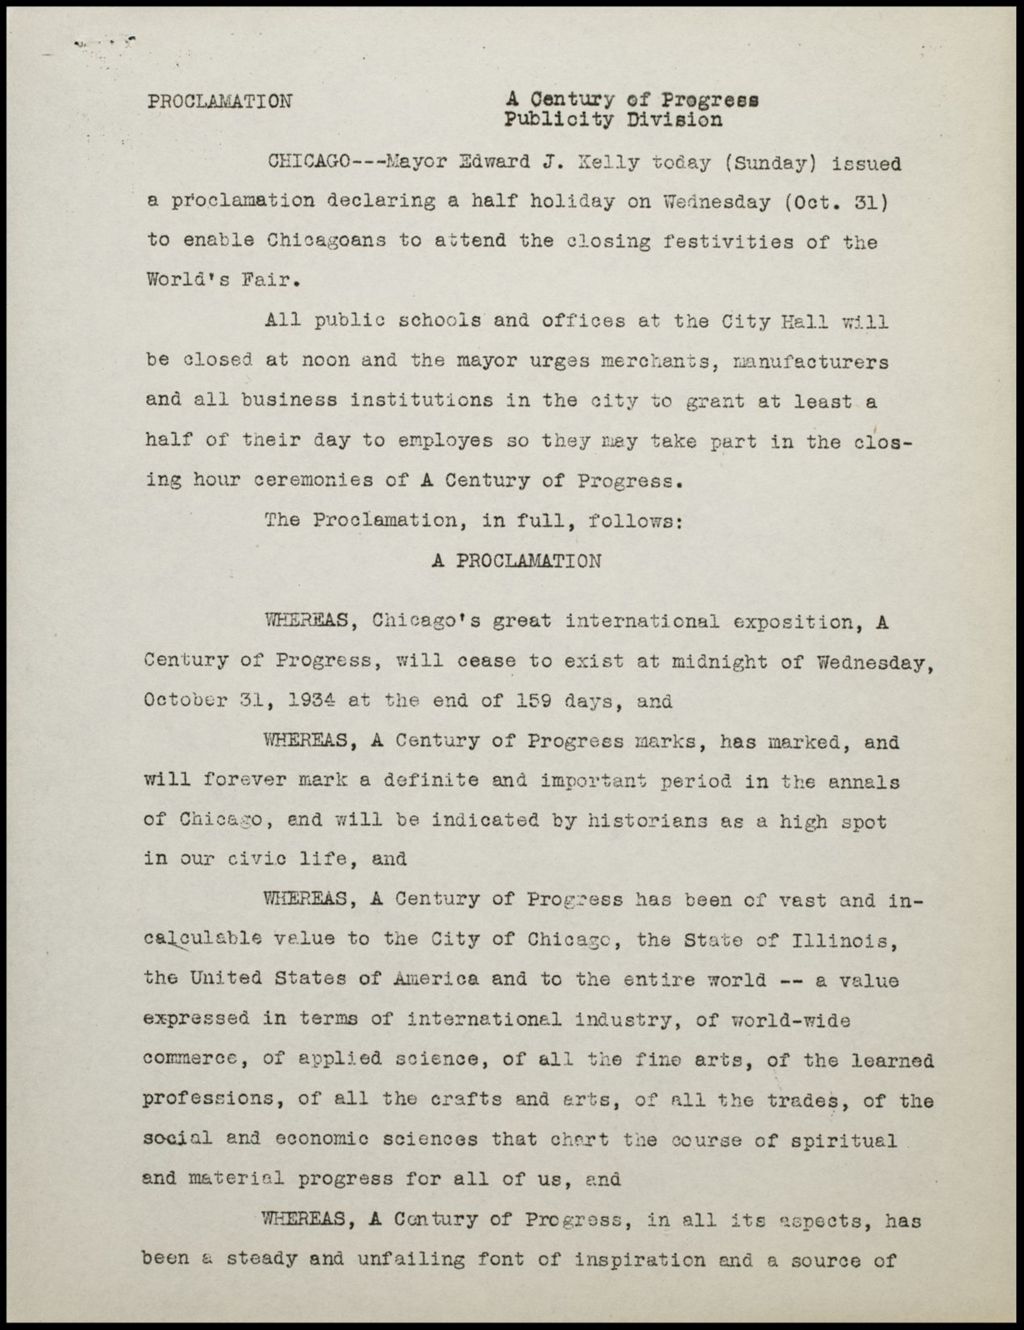 Kelly Proclamation, October 1934 (Folder 14-221)